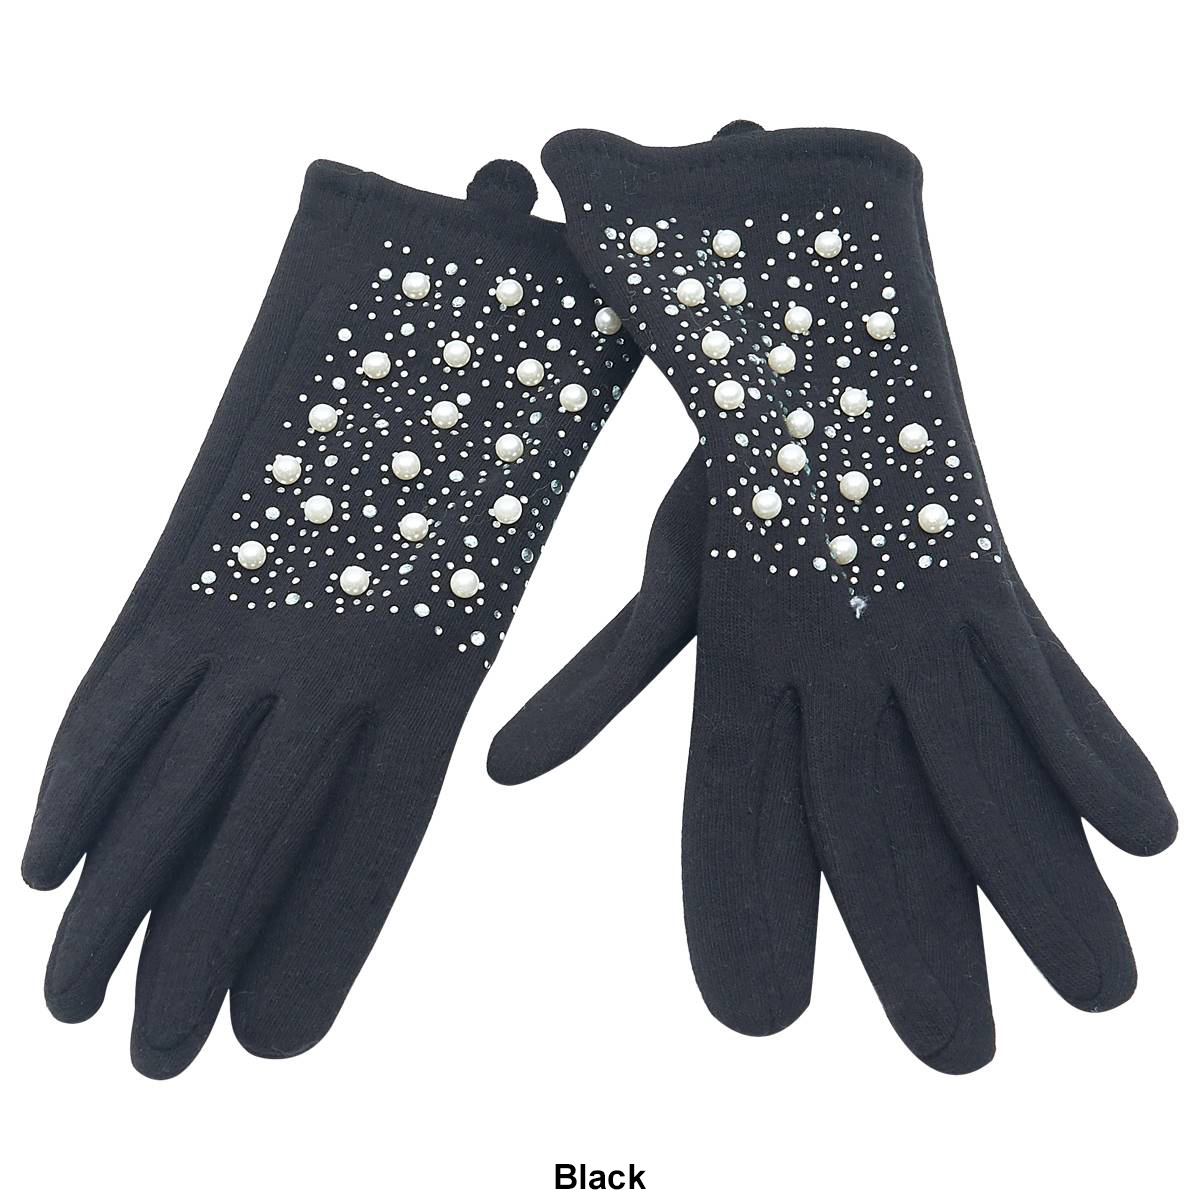 Womens Adrienne Vittadini Pearl Rhinestone Touchscreen Glove